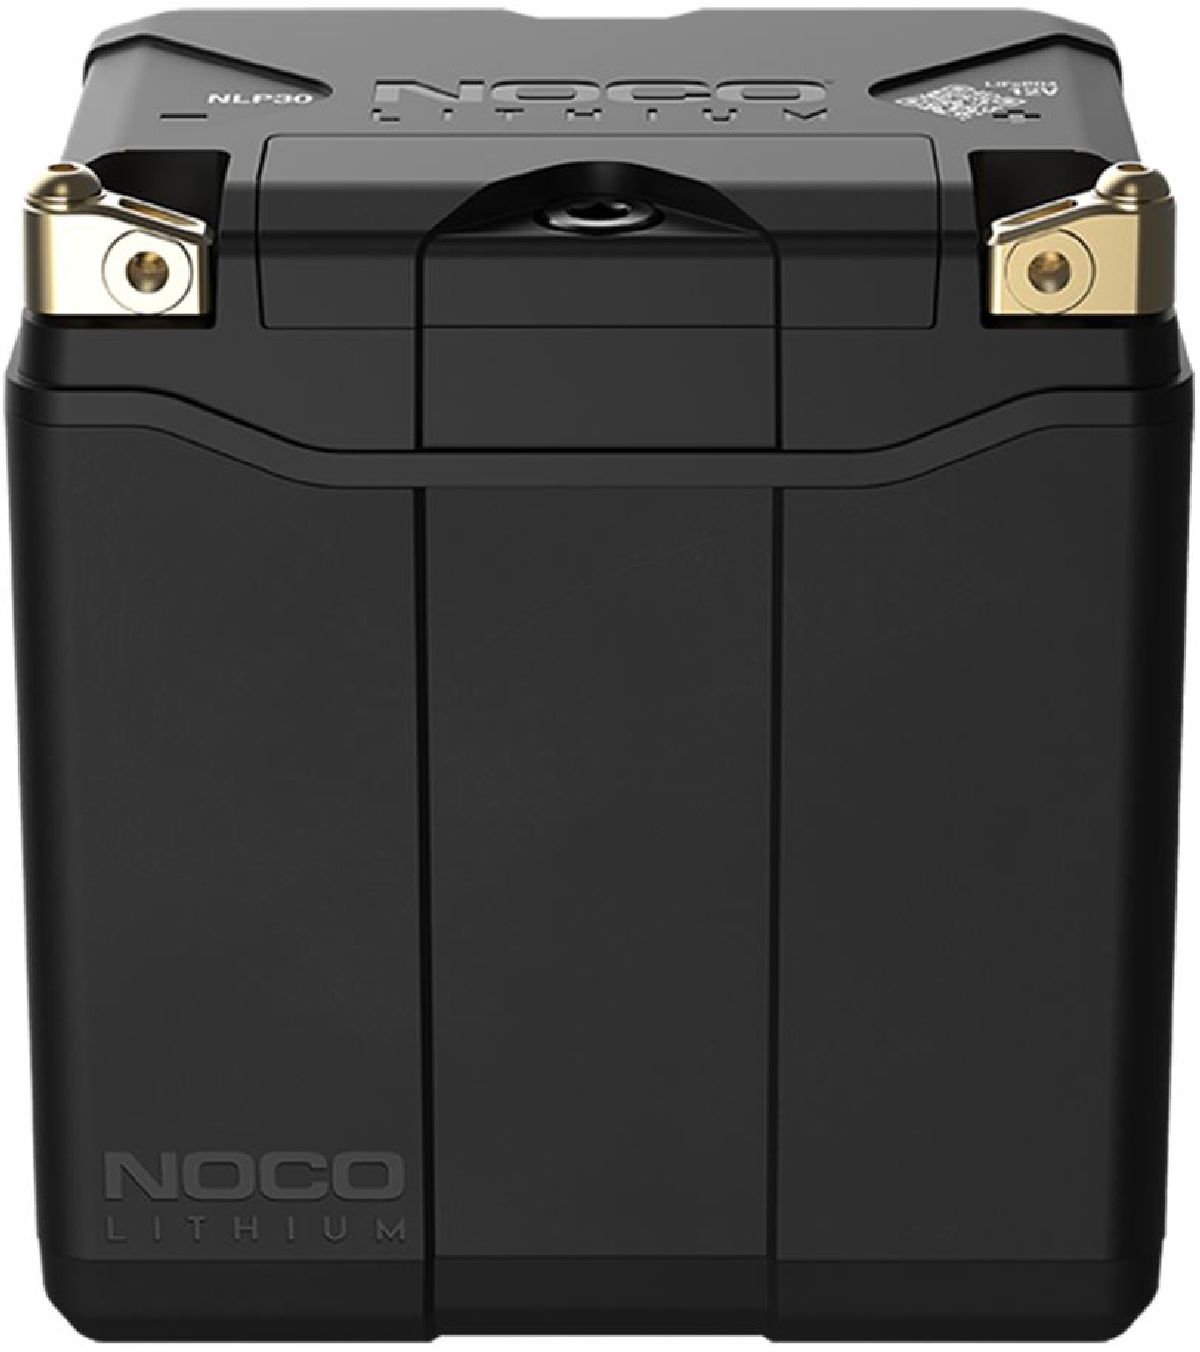 Noco Lithium Batterie 12V/8Ah/700A - Krautli (Schweiz) AG - Shop